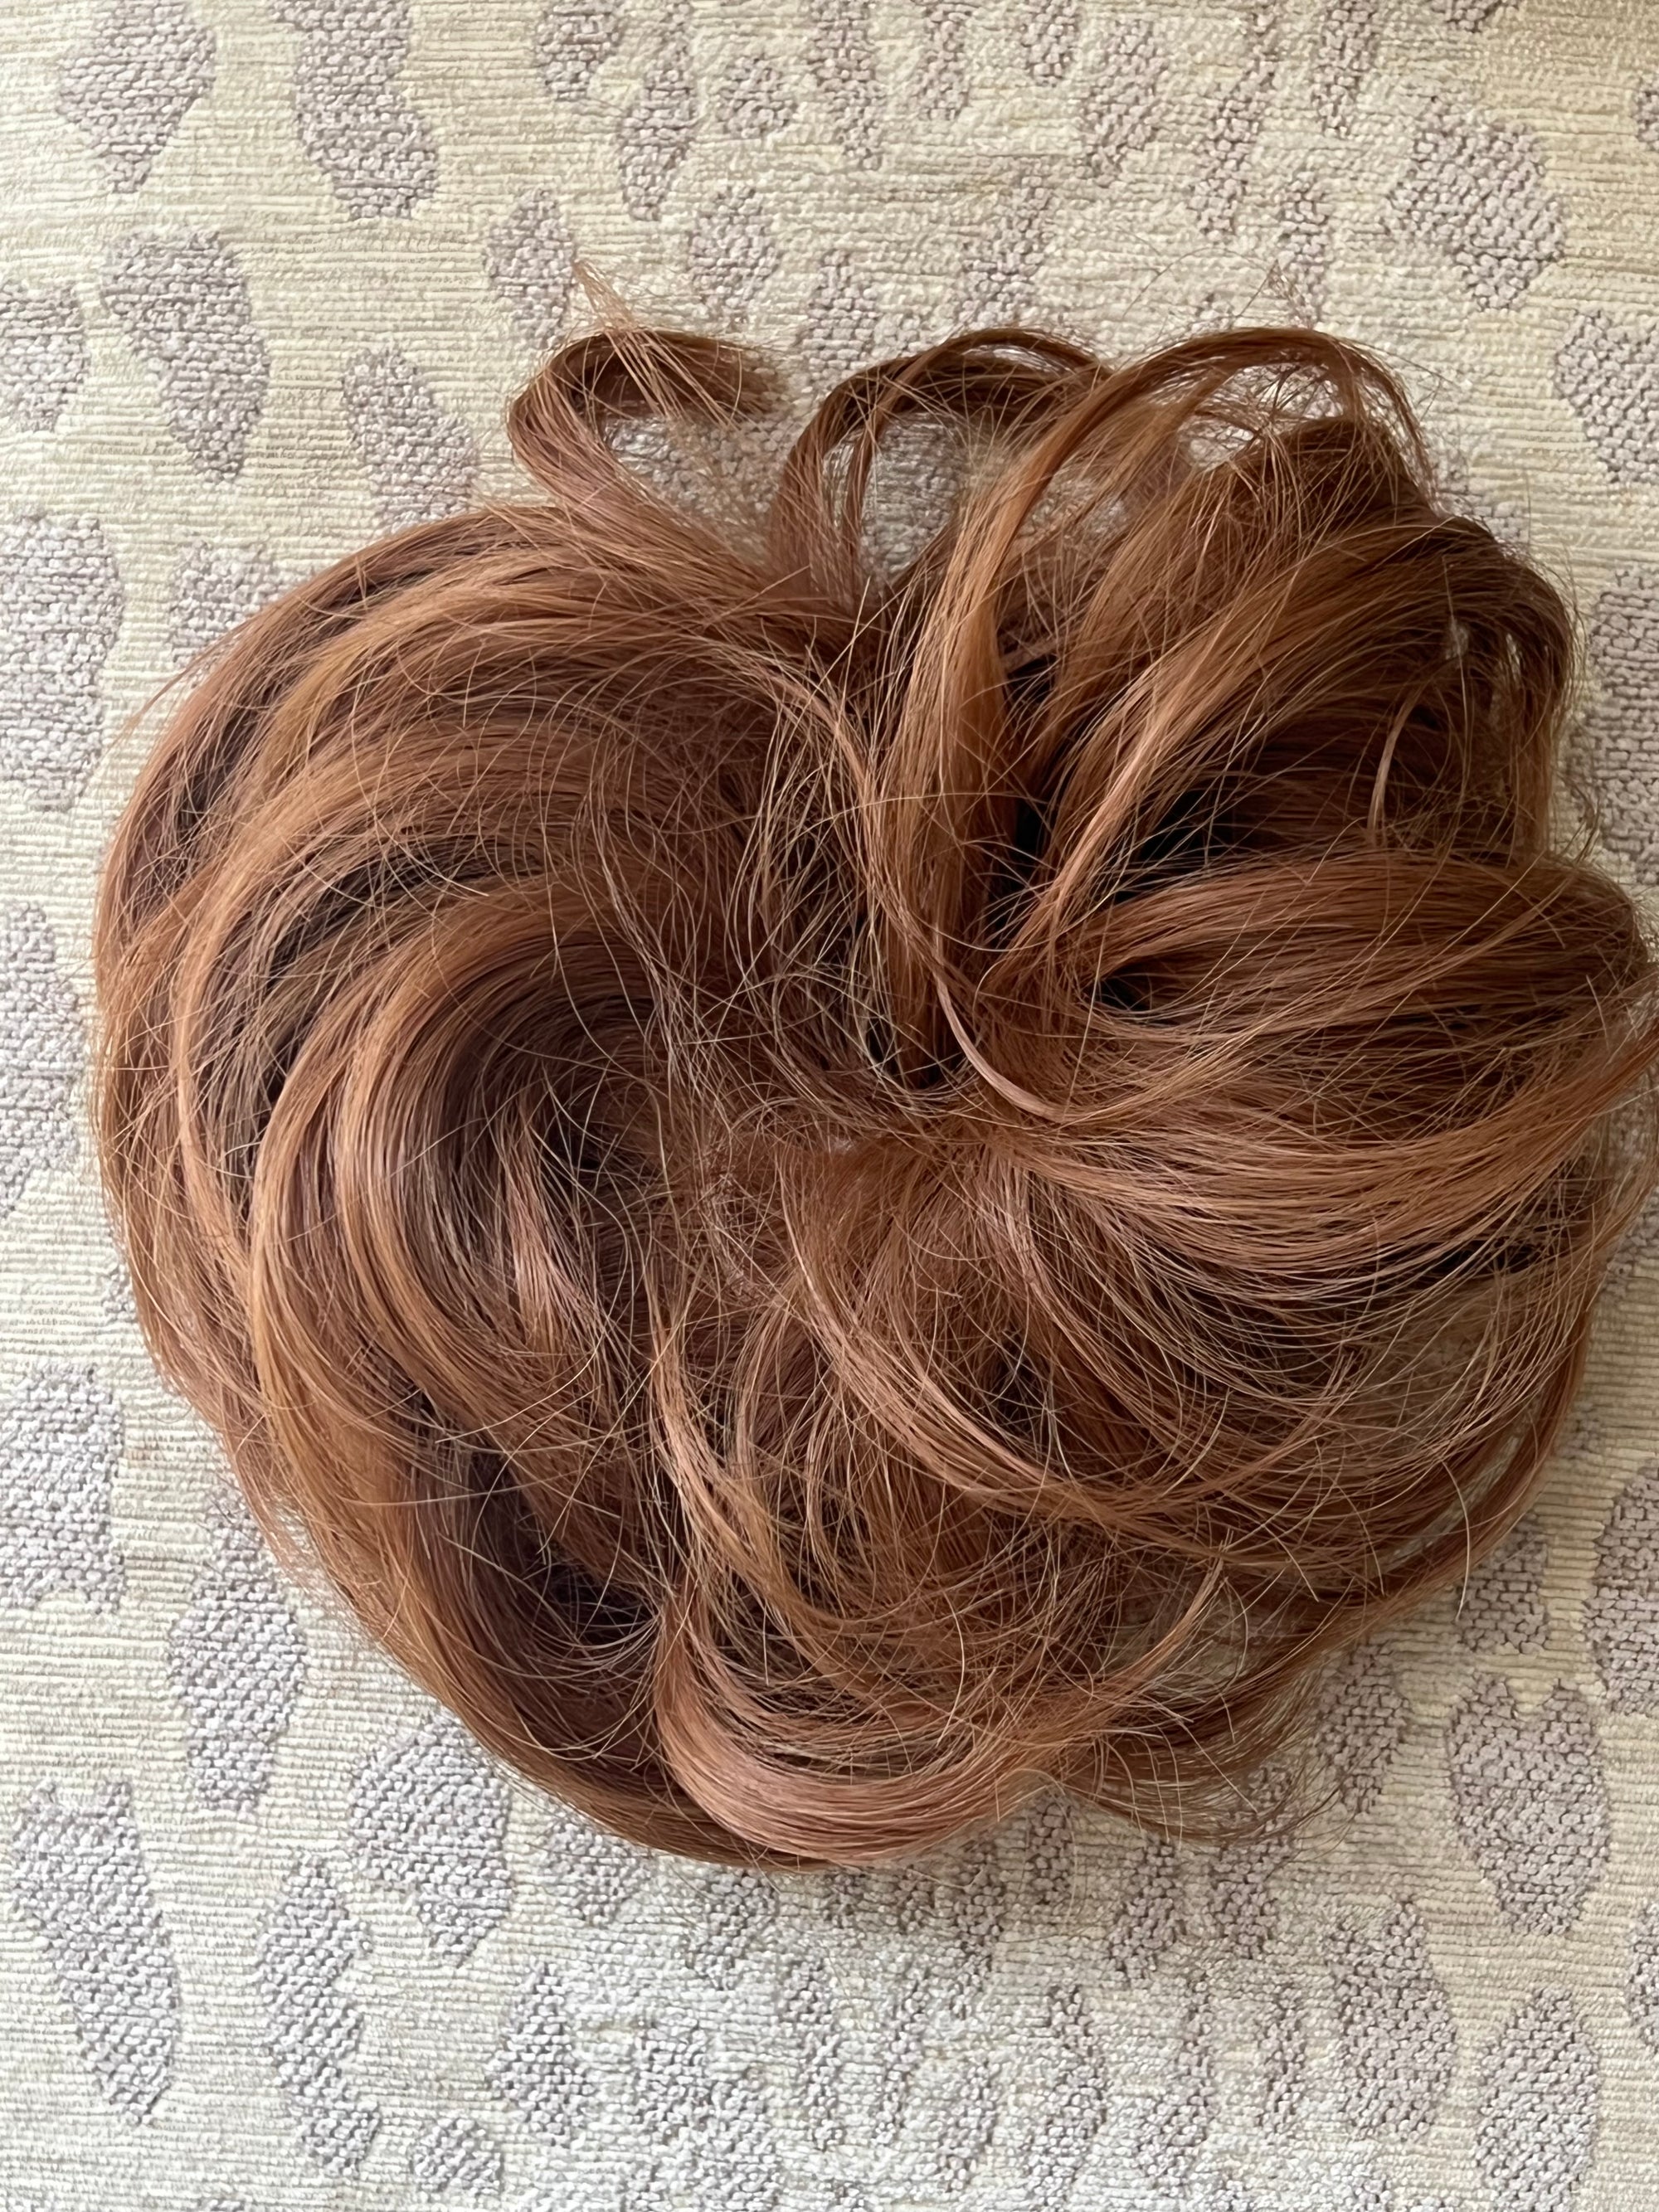 Tillstlye messy hair bun